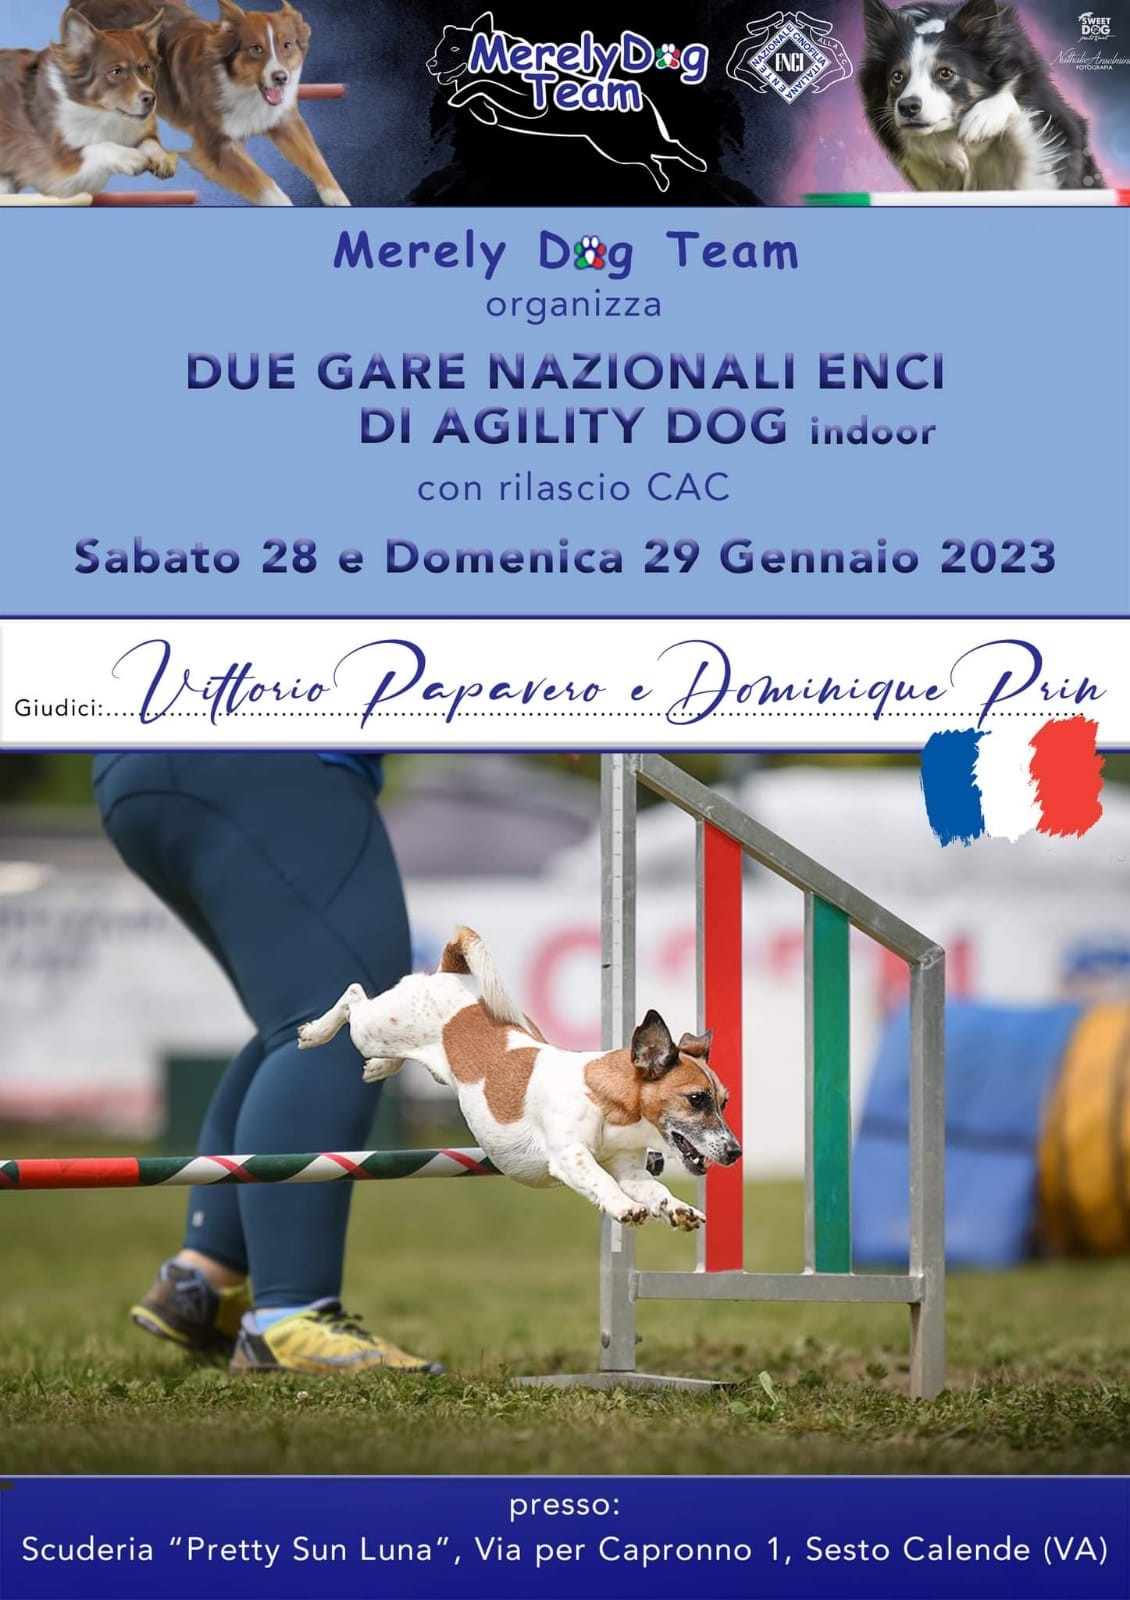 Merely Dog Team organizza Domenica 29 Gennaio 2023